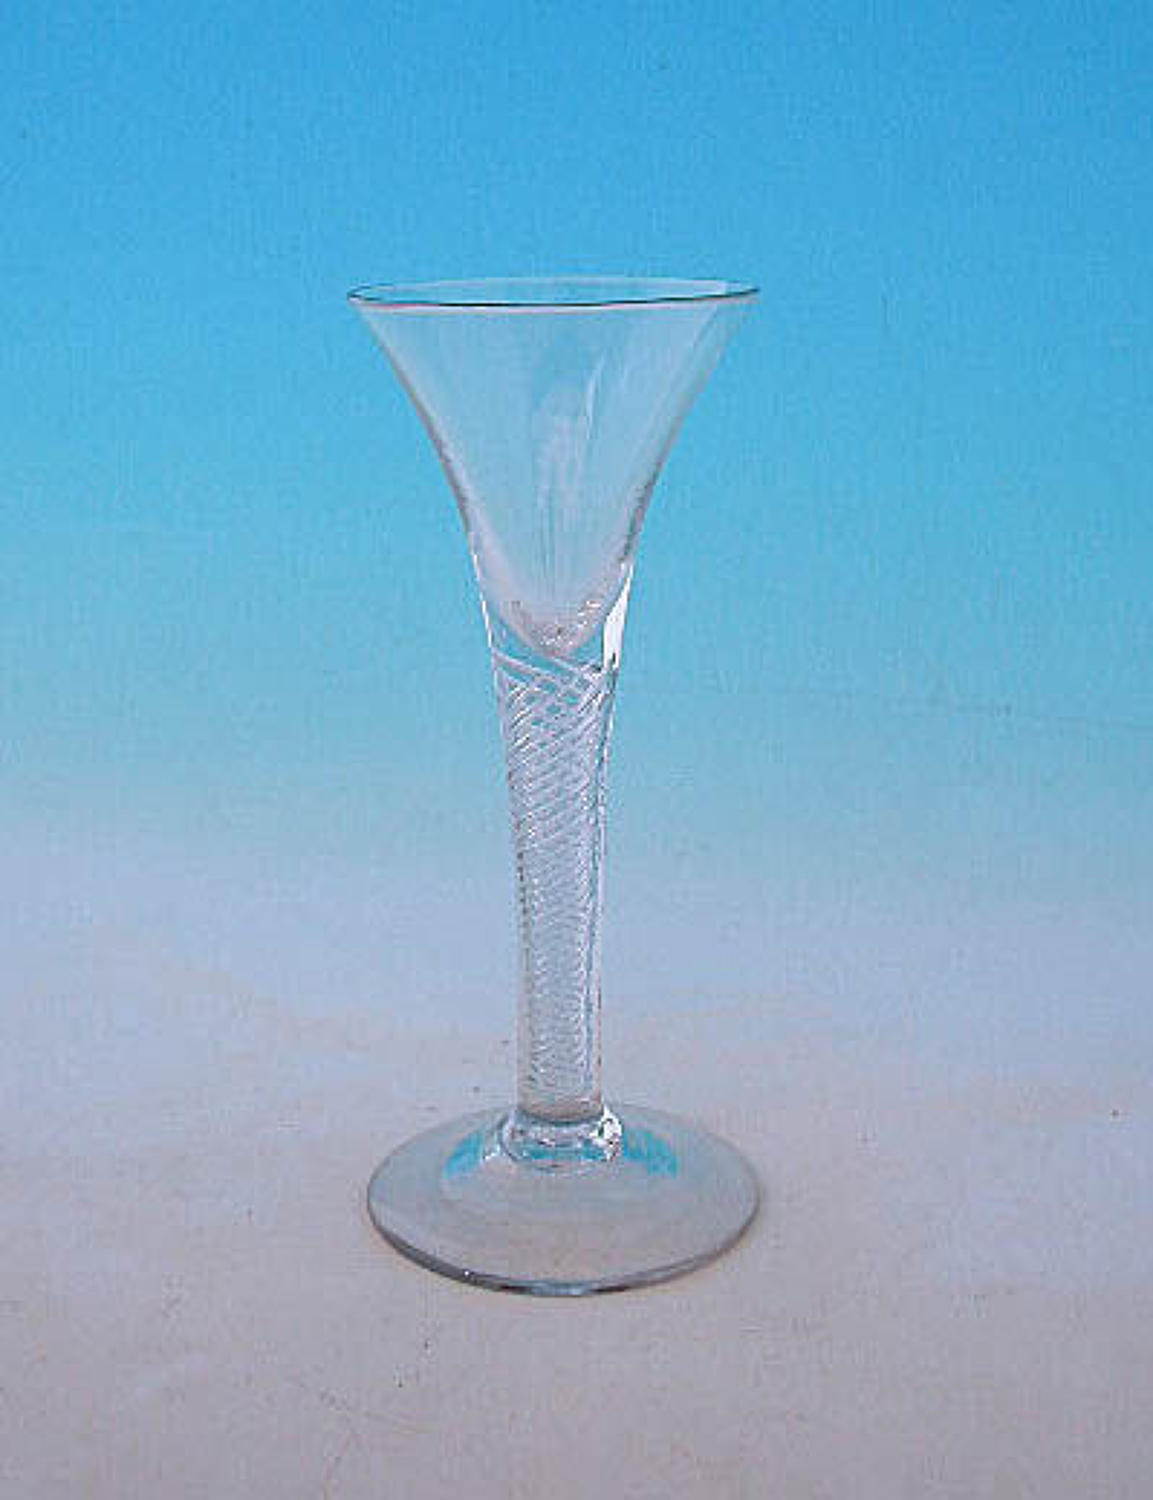 Antique 18thc Multi Spiral Twist Wine Glass.  English. C1750-60.